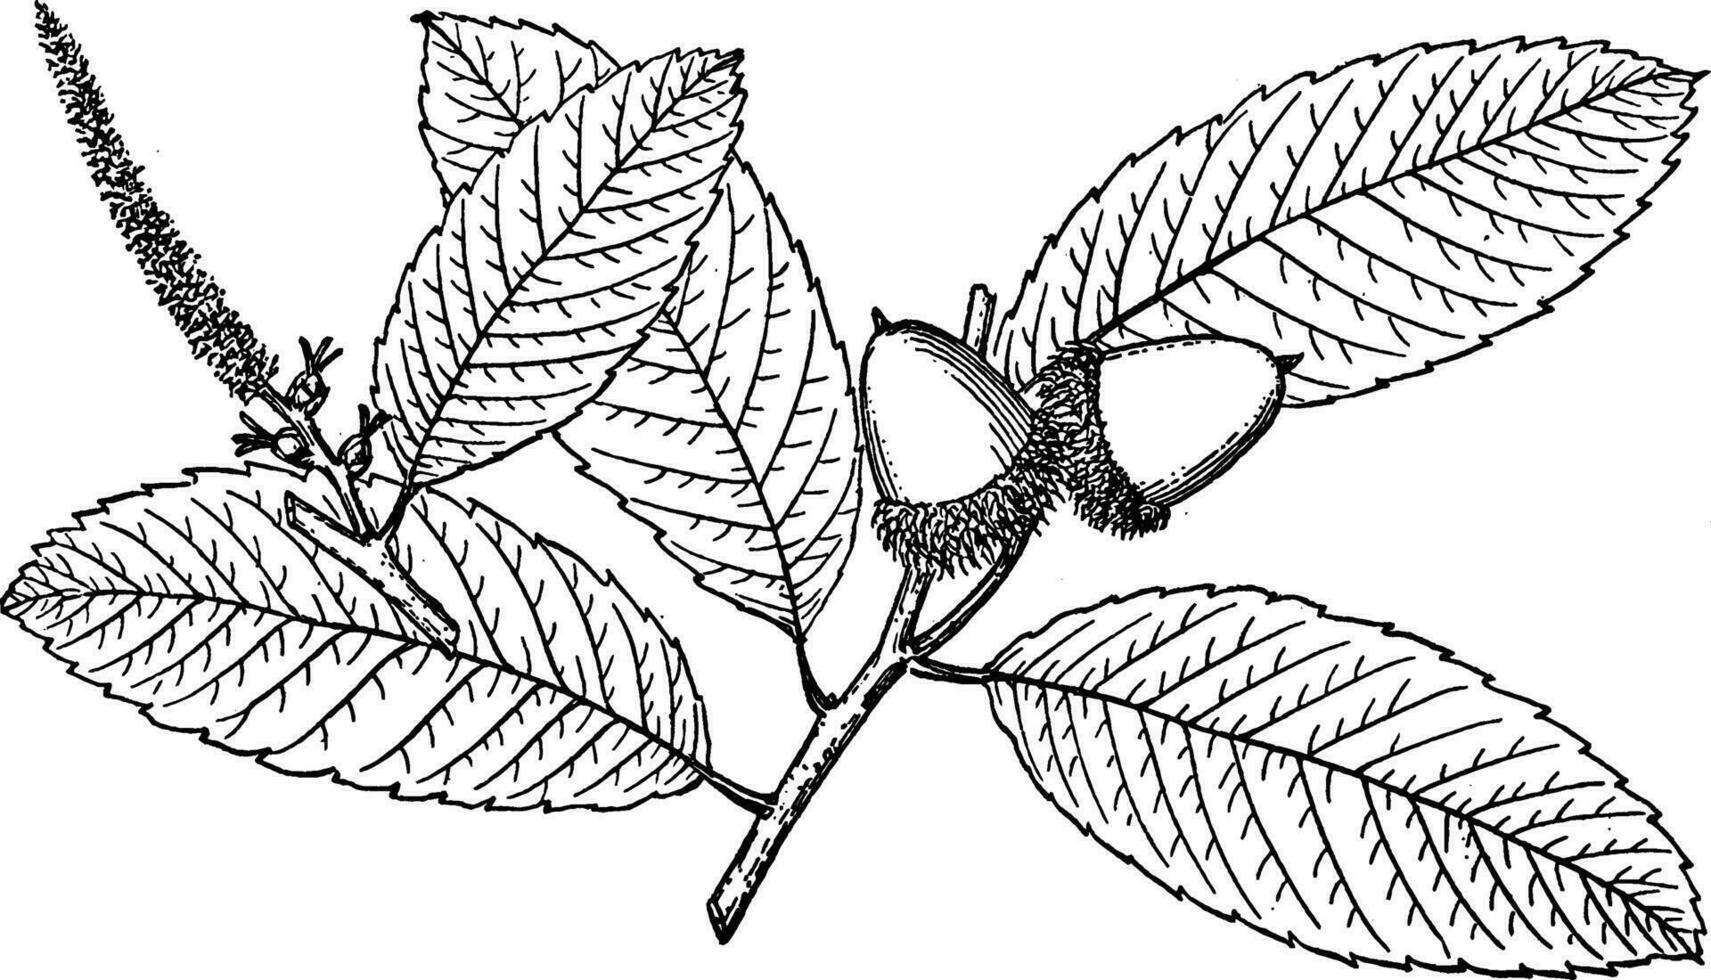 branche de pasania densiflore ancien illustration. vecteur